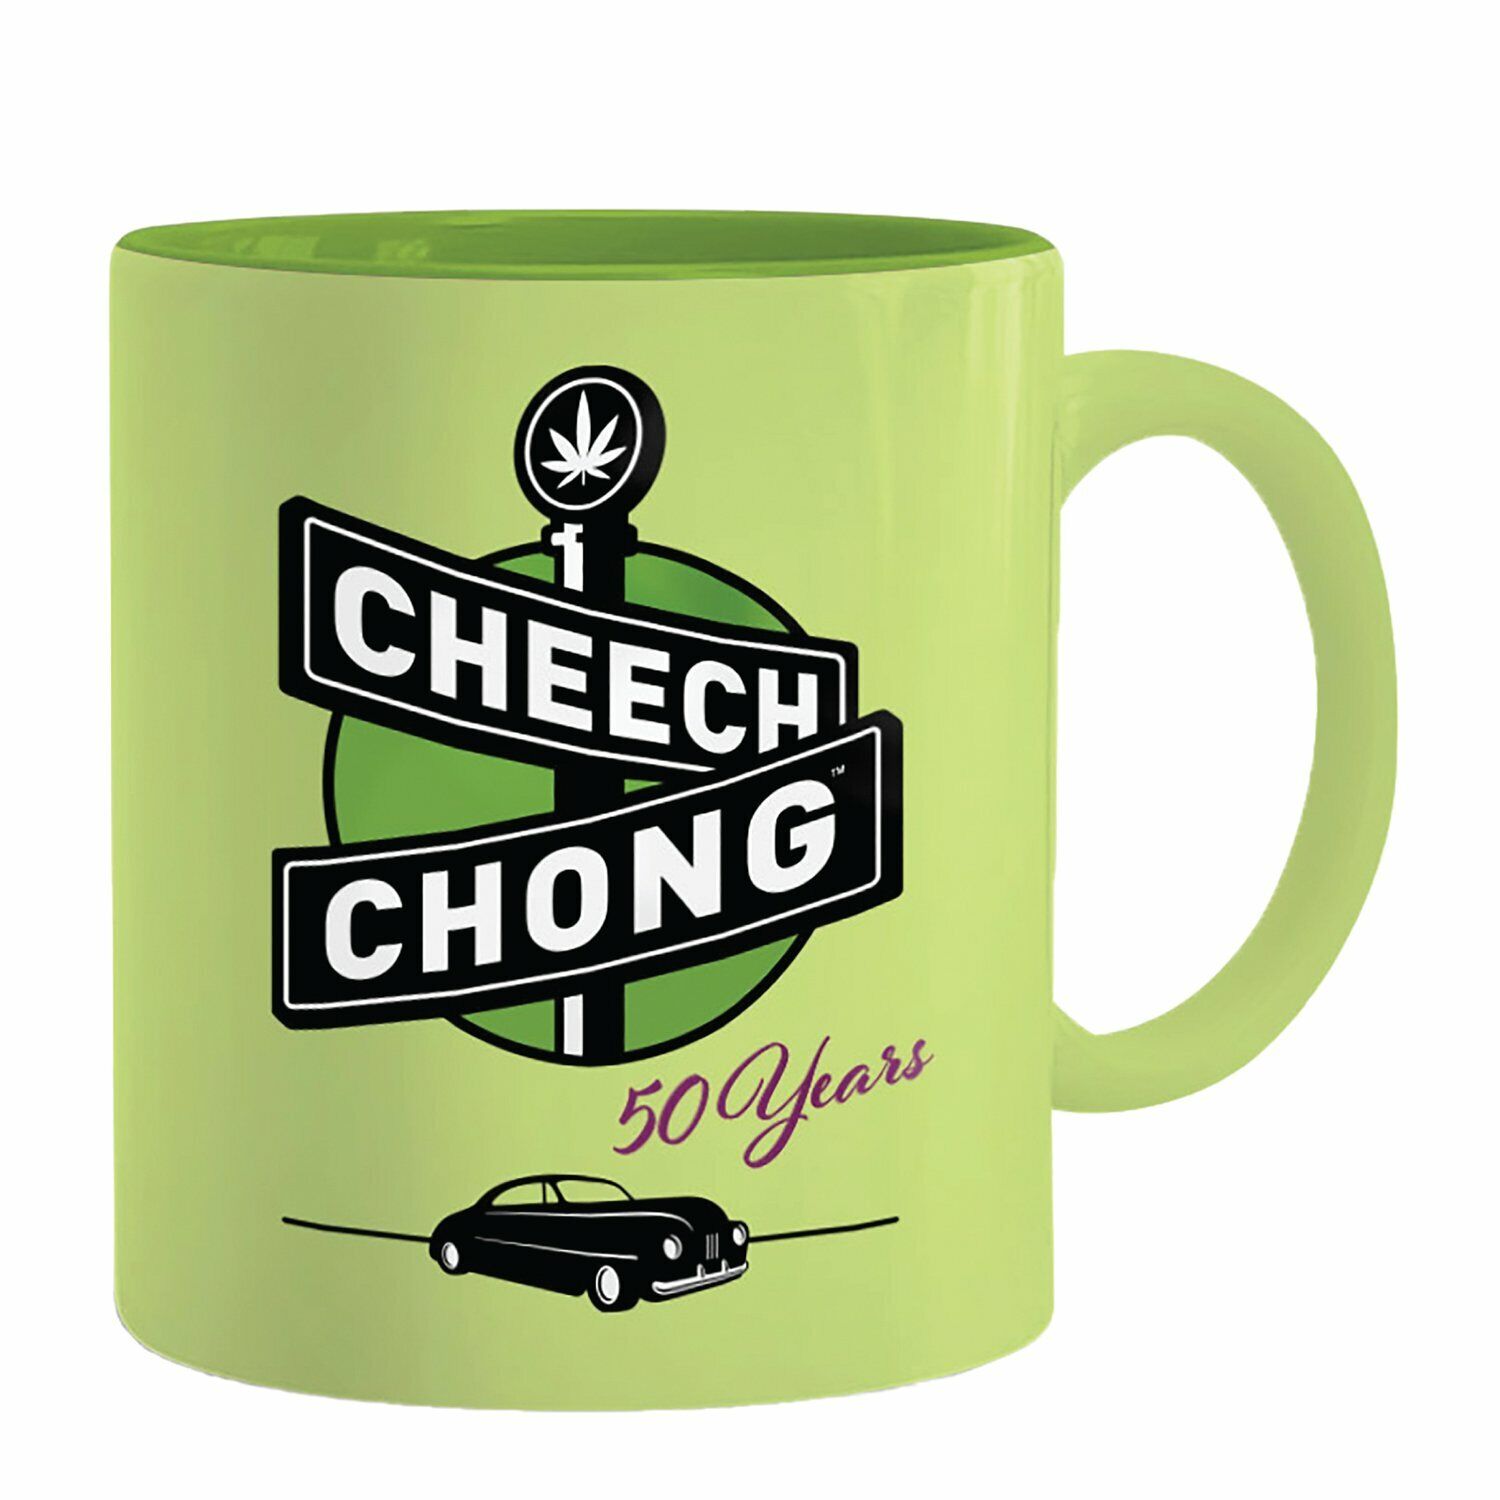 Cheech and Chong 50th Anniversary Special Edition Coffee Mug - Los Cochinos 